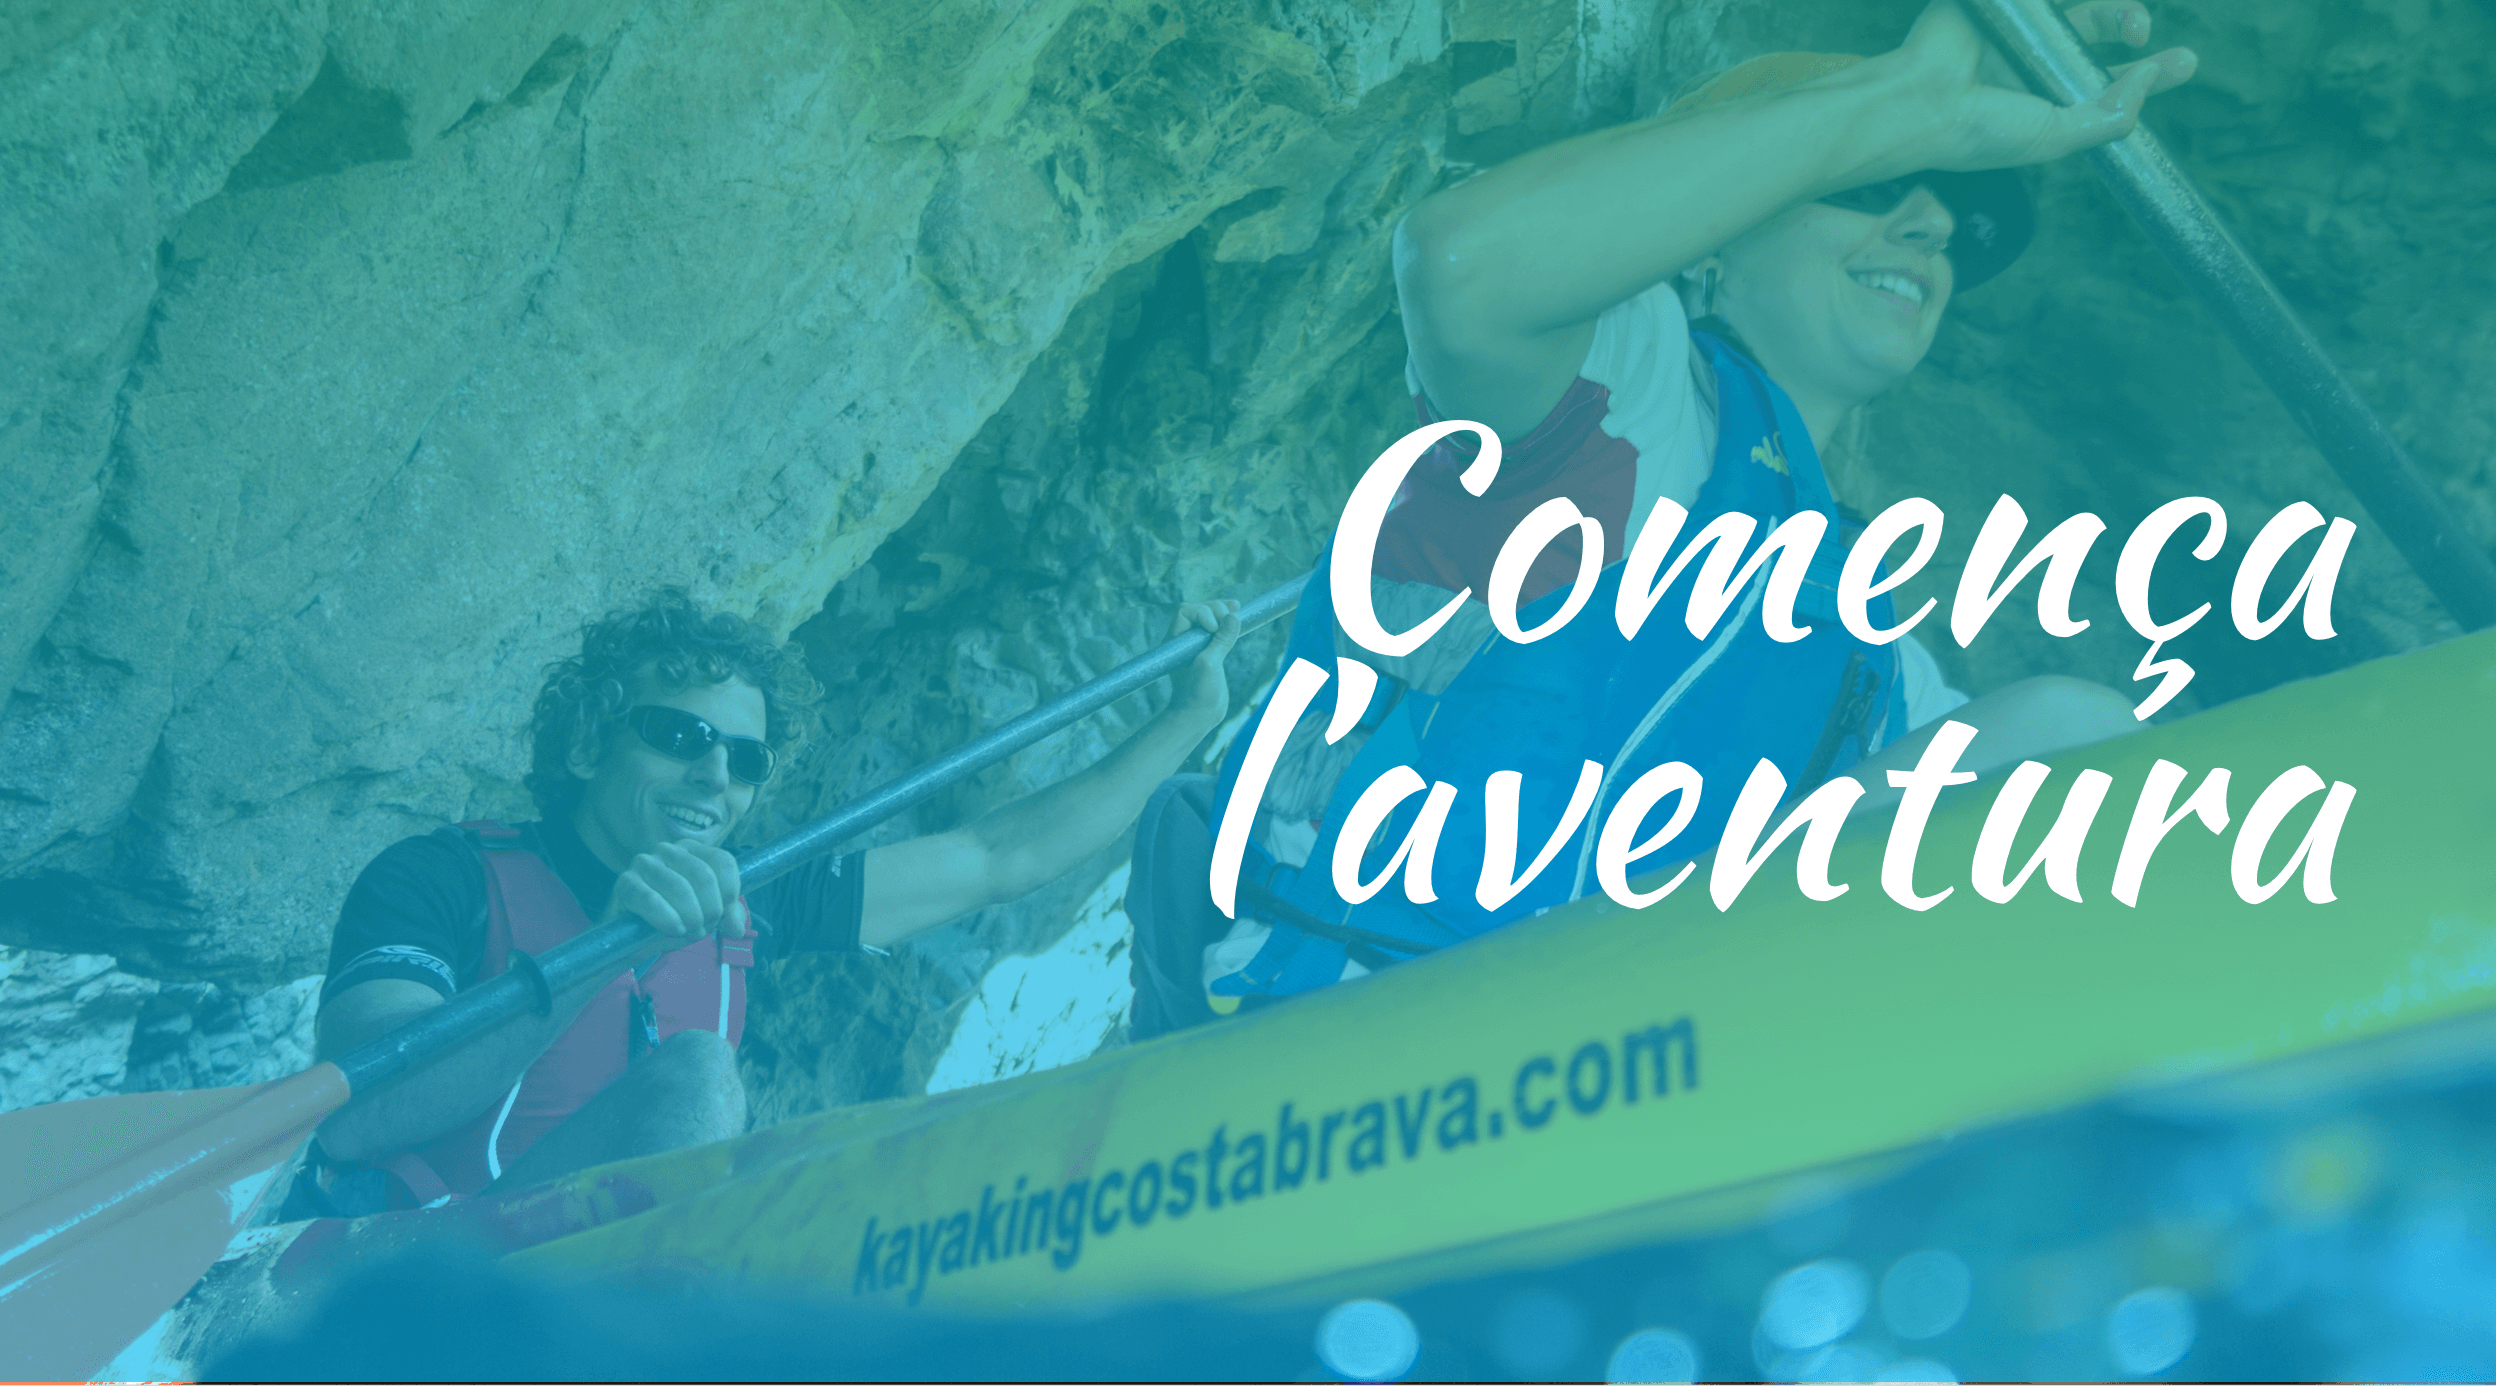 Web kayaking Costa Brava